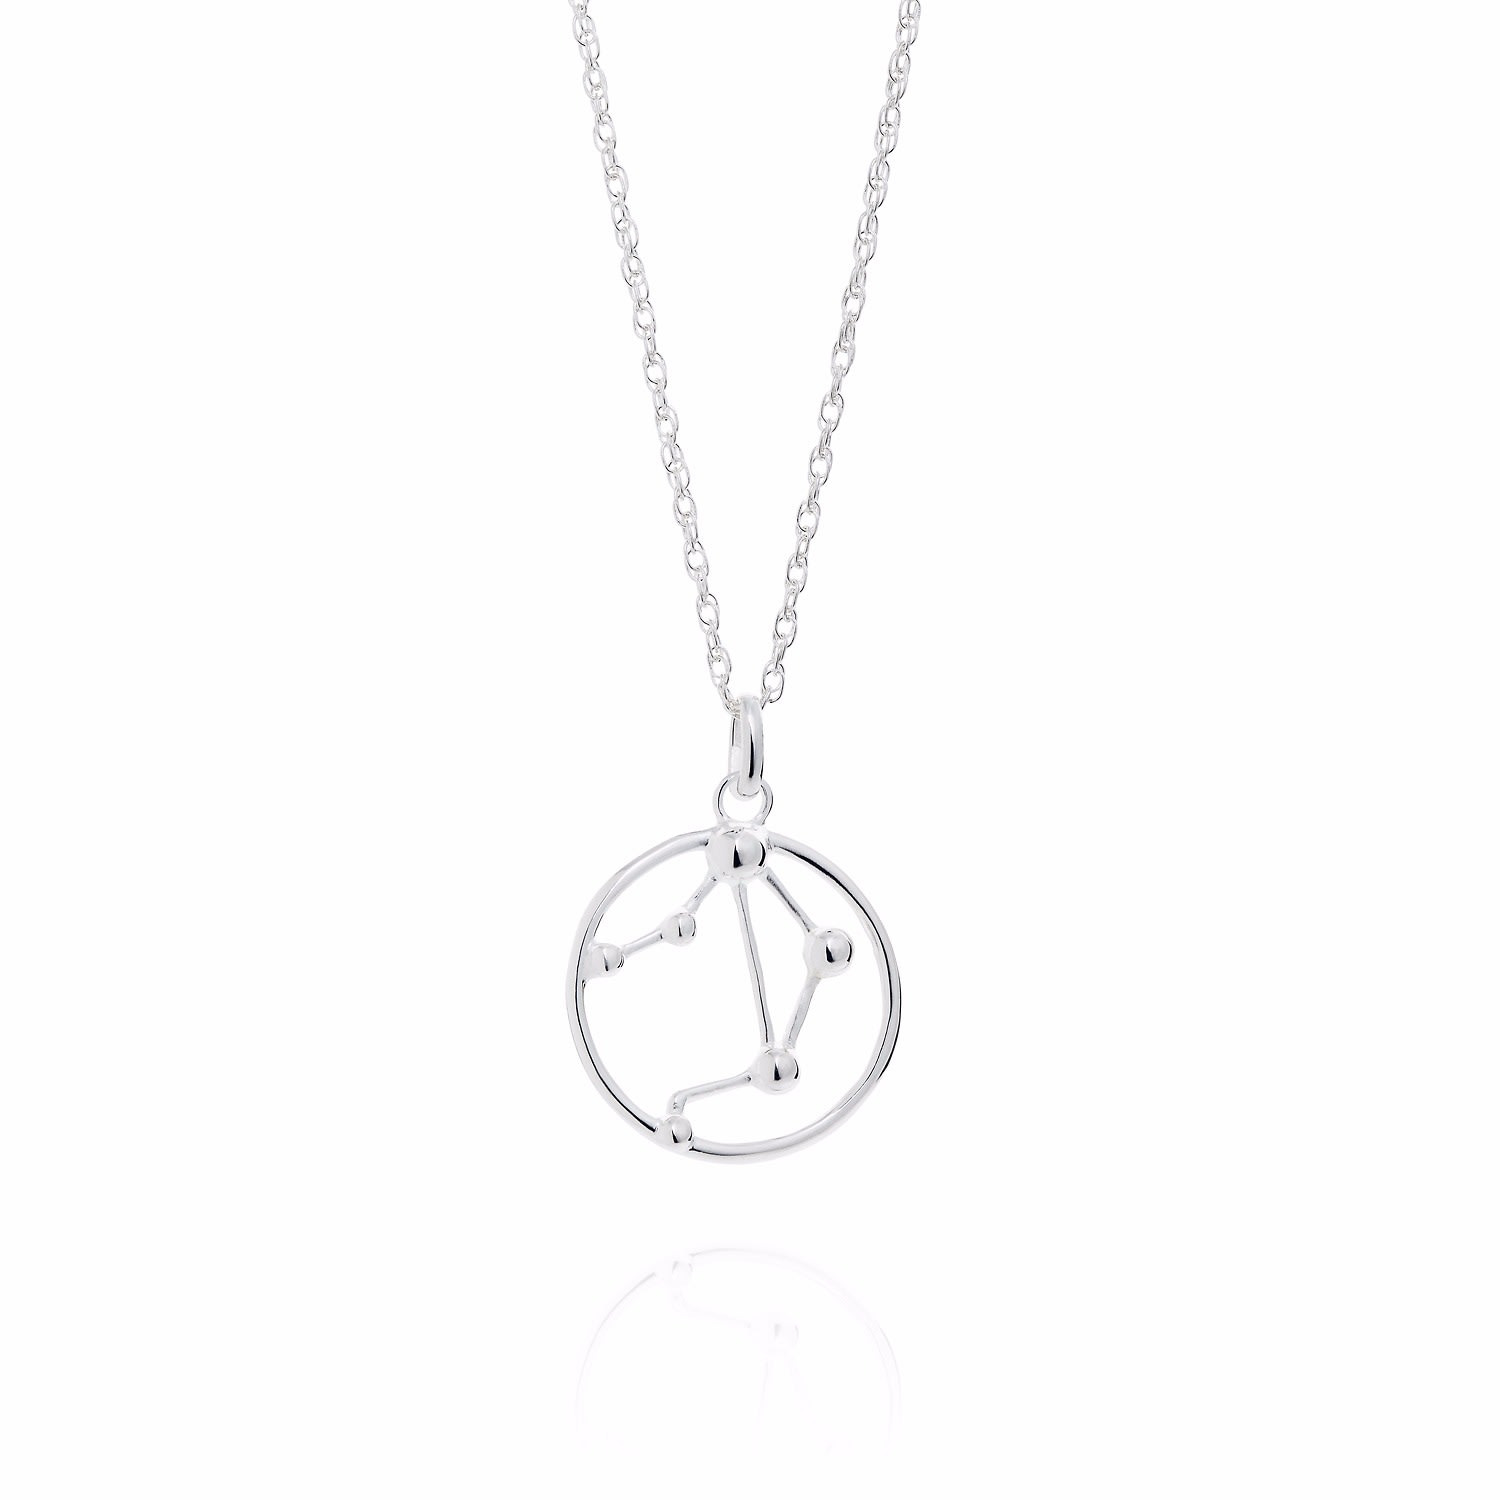 Women’s Silver Libra Astrology Necklace Yasmin Everley Jewellery